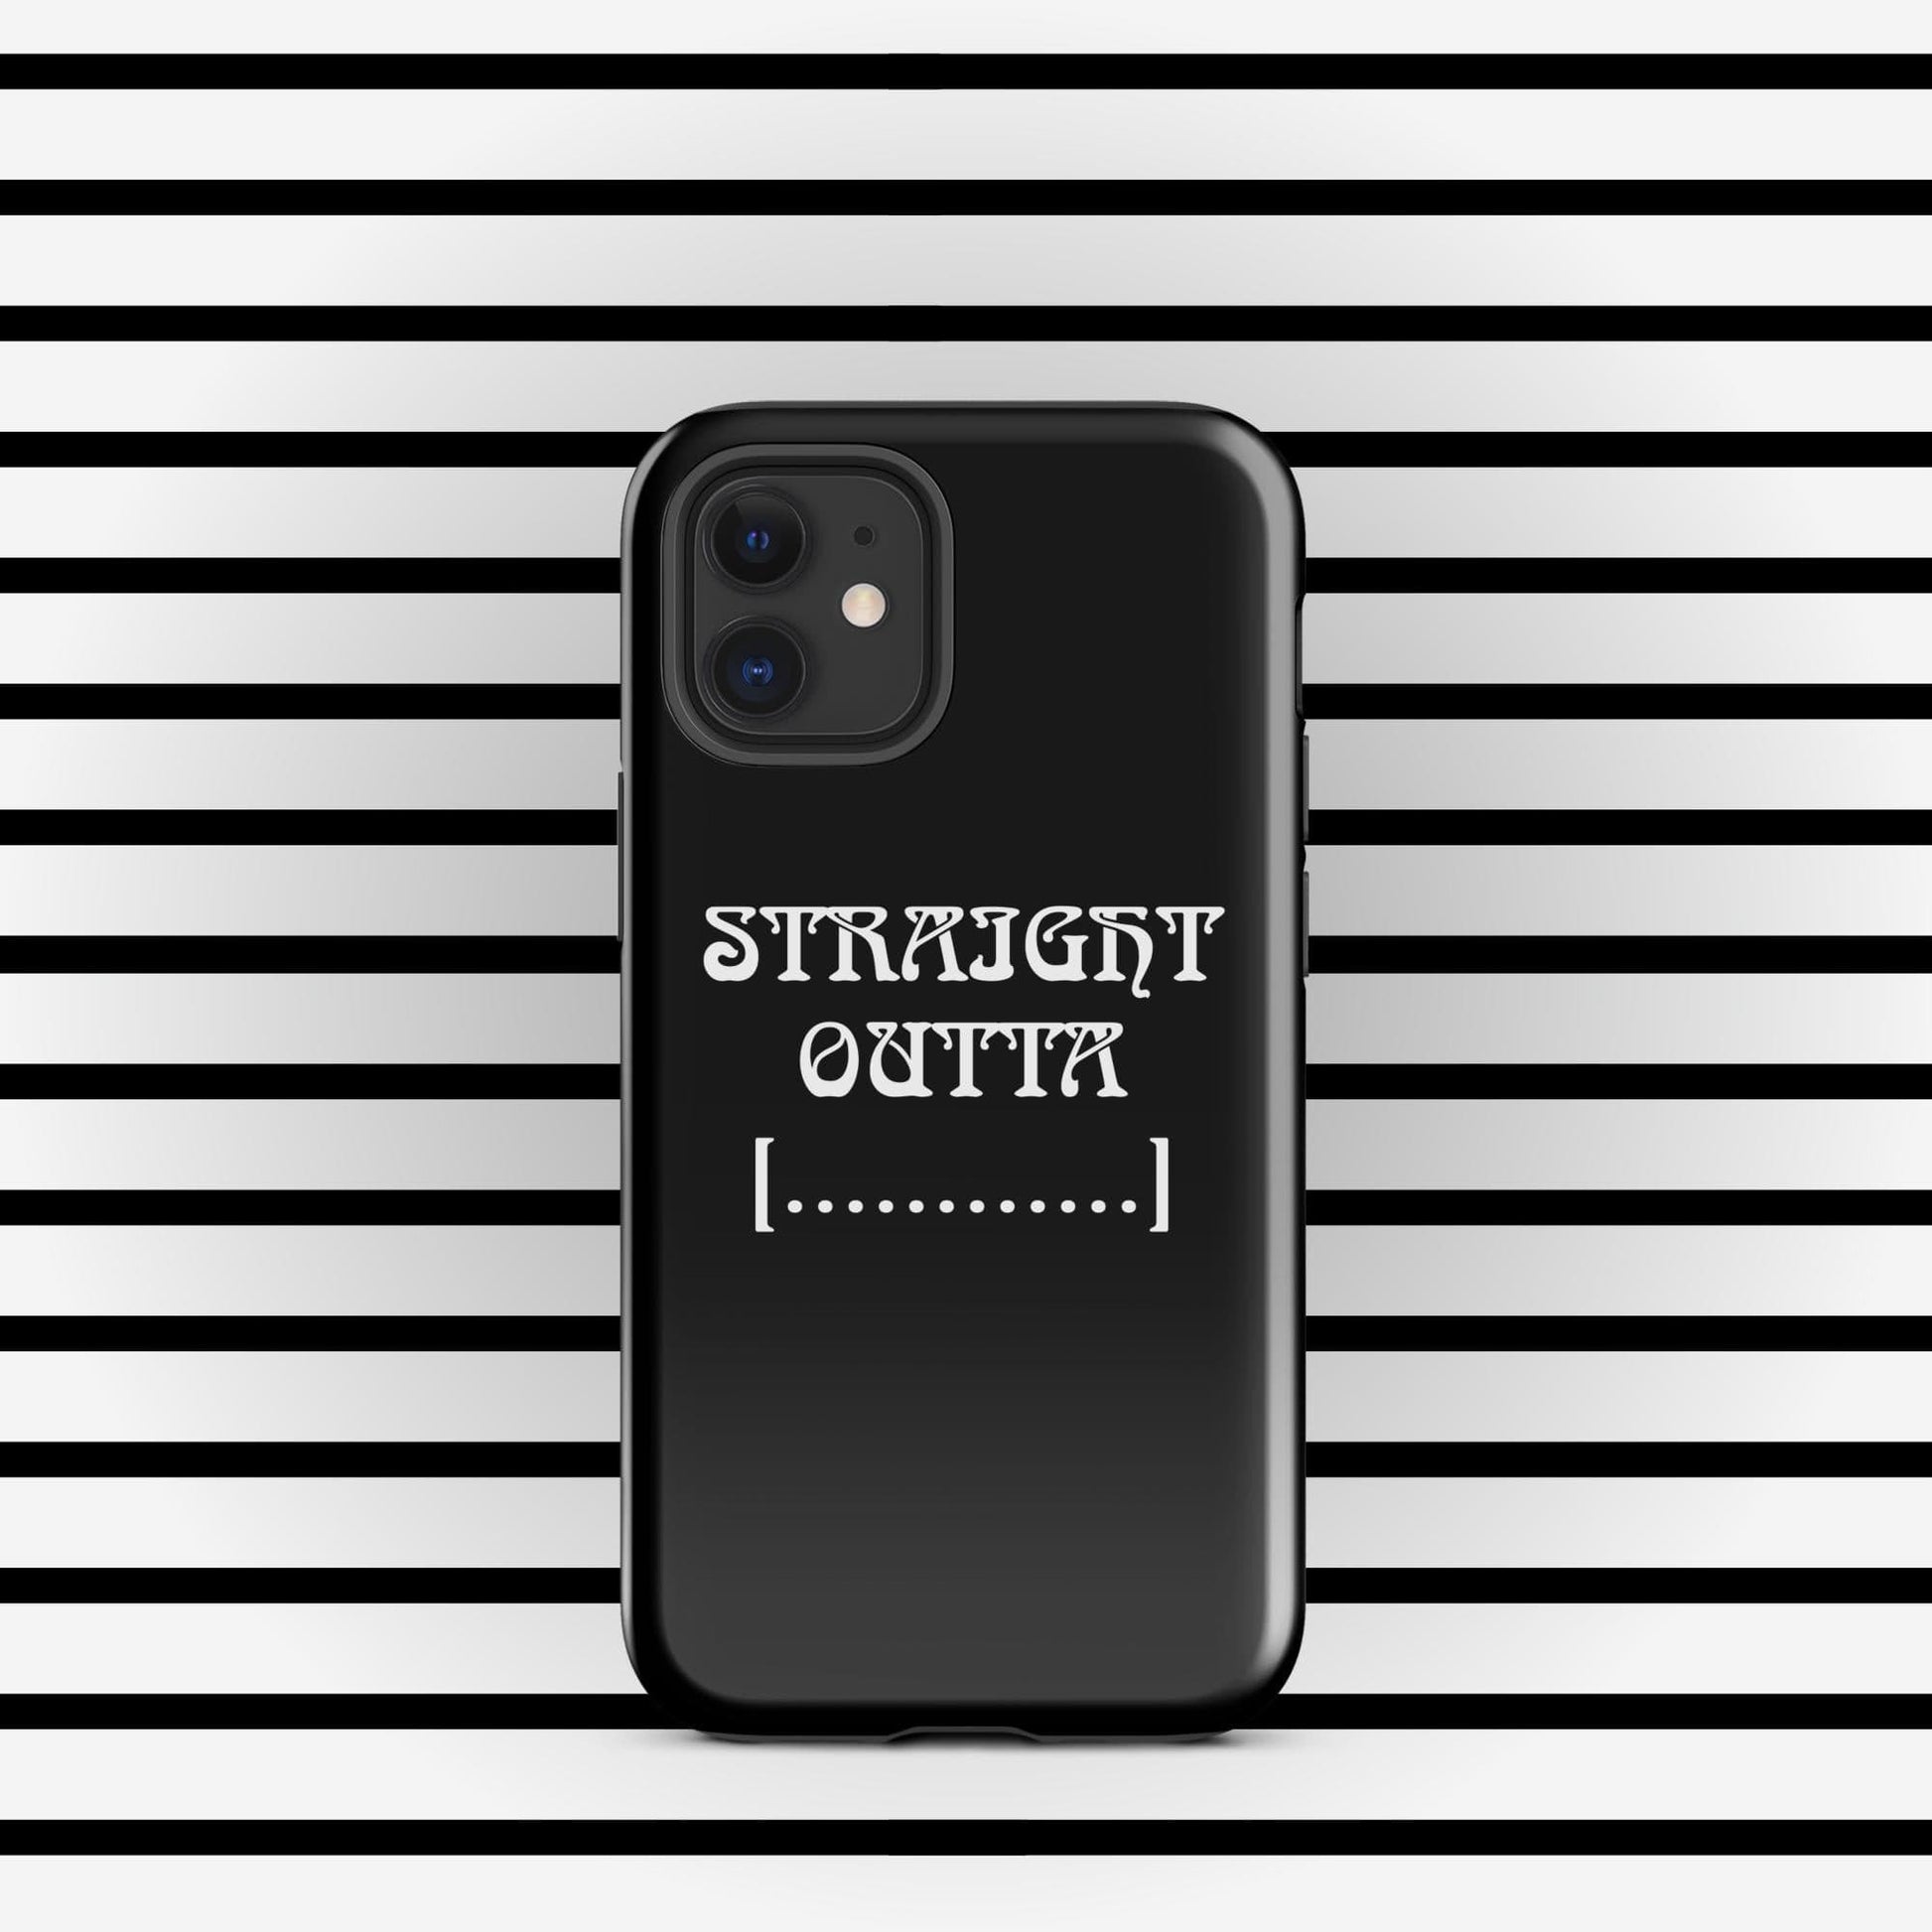 Trendyguard iPhone 12 mini STRAIGHT OUTTA | [Custom] Tough Case for iPhone®